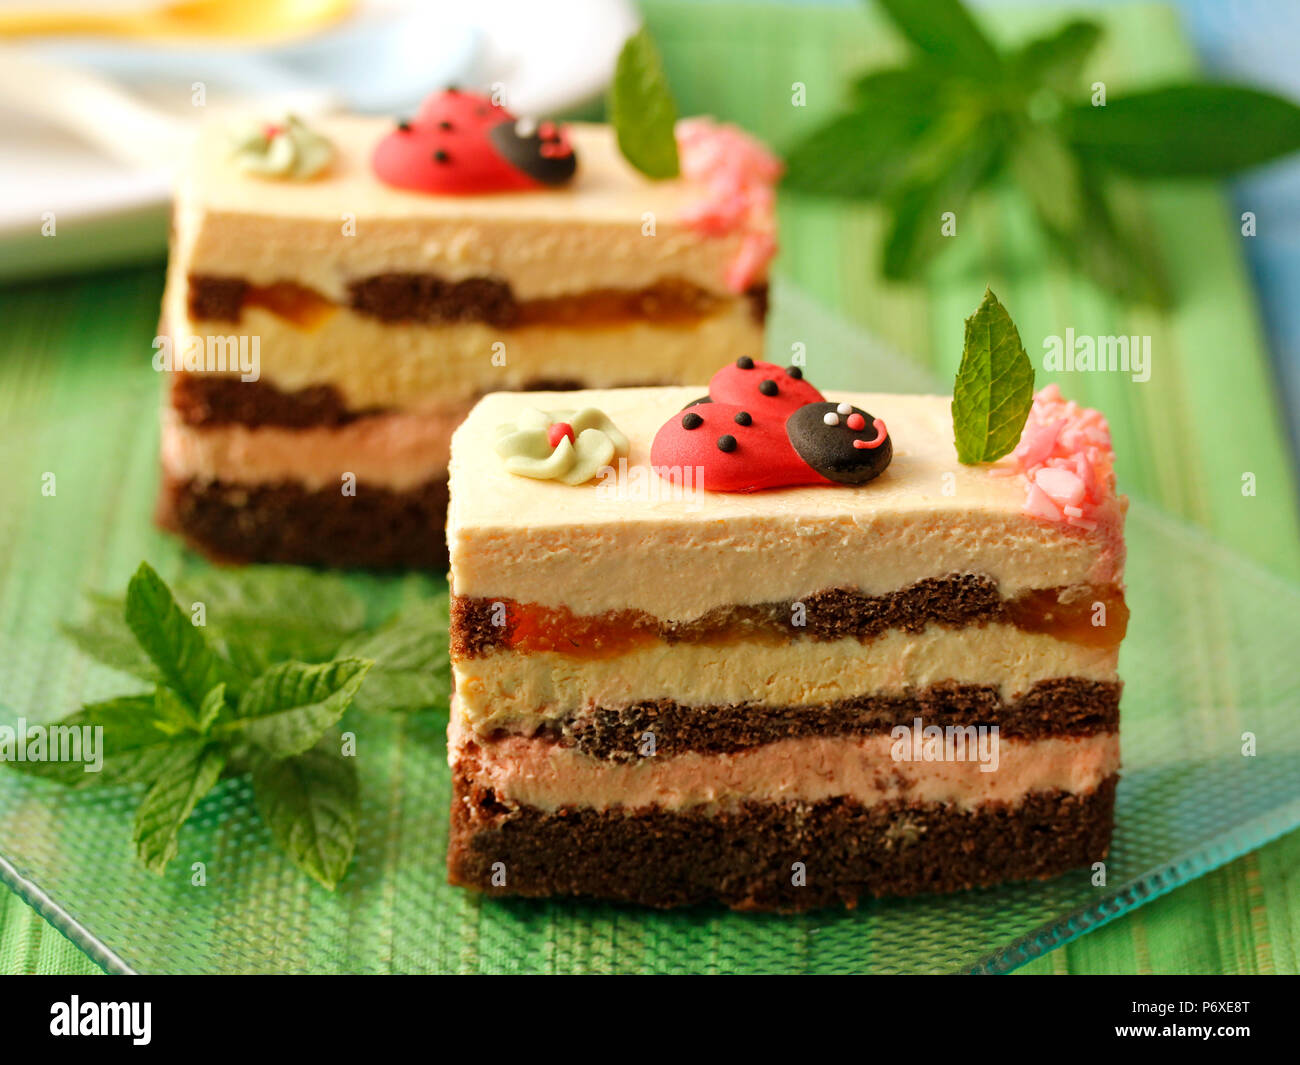 Portions of sponge cake. Stock Photo